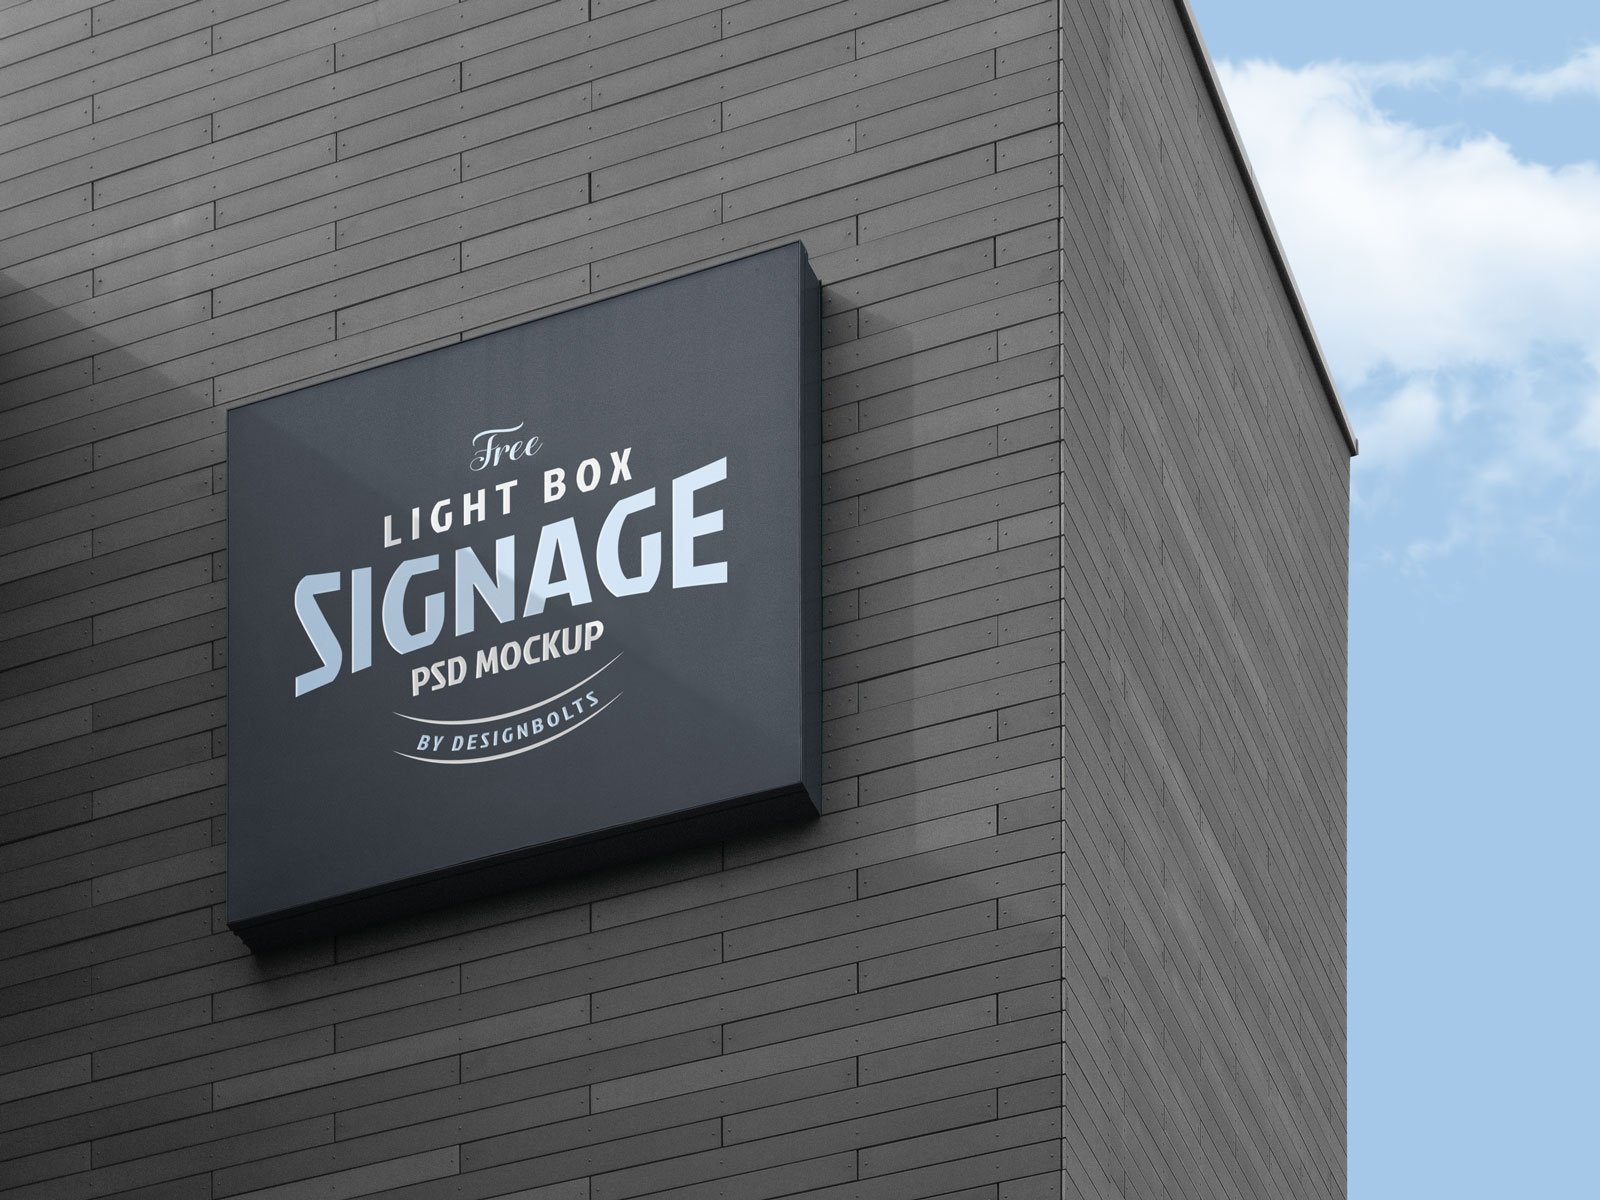 Free Wall Mounted Company Logo Signage Board on Building Mockup PSD | Designbolts